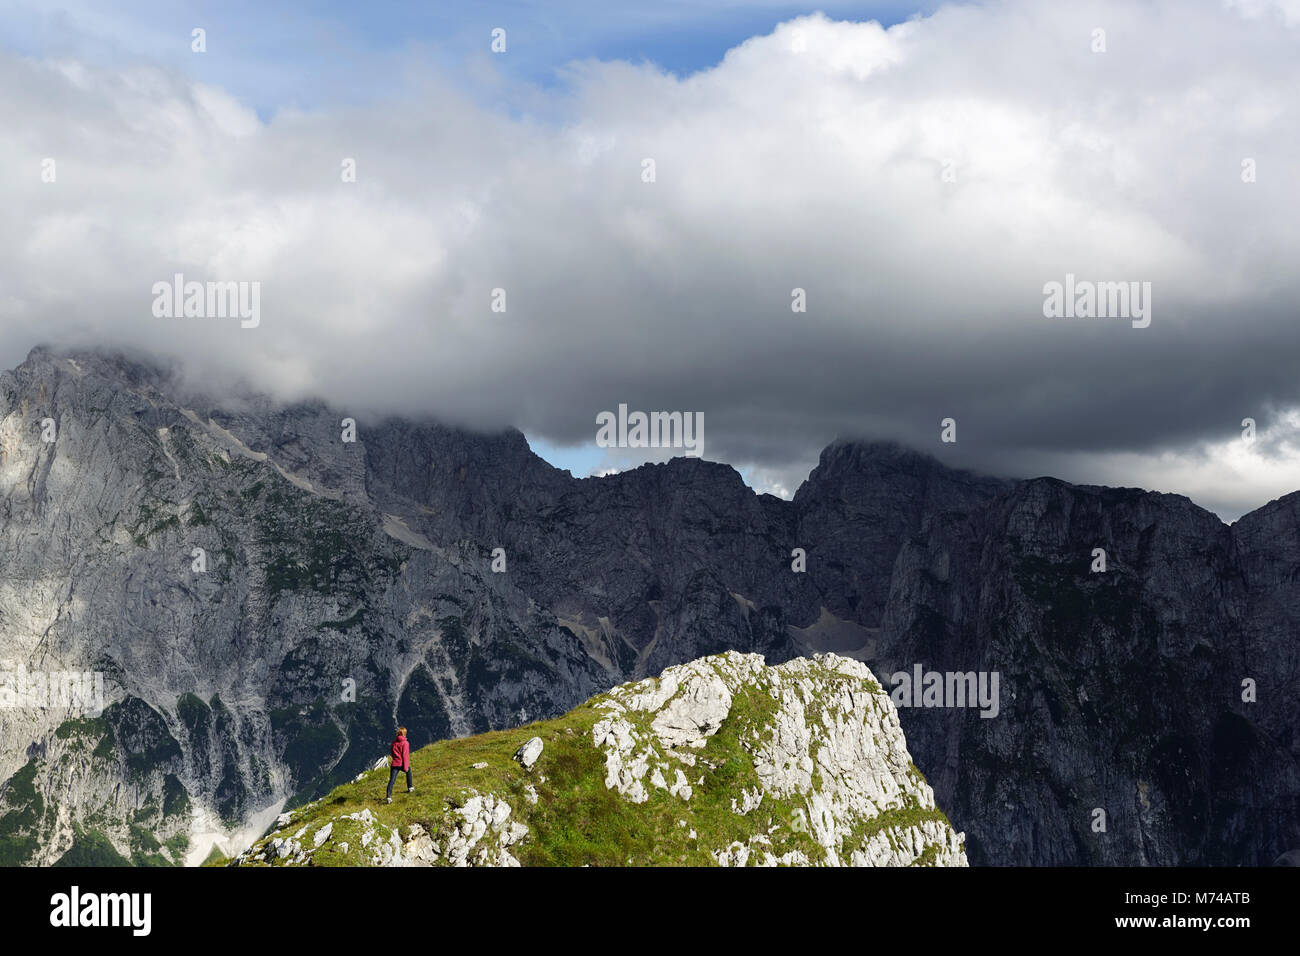 Woman in red jacket hiking on steep slopes, Mangart saddle, Julian alps, Slovenia Stock Photo